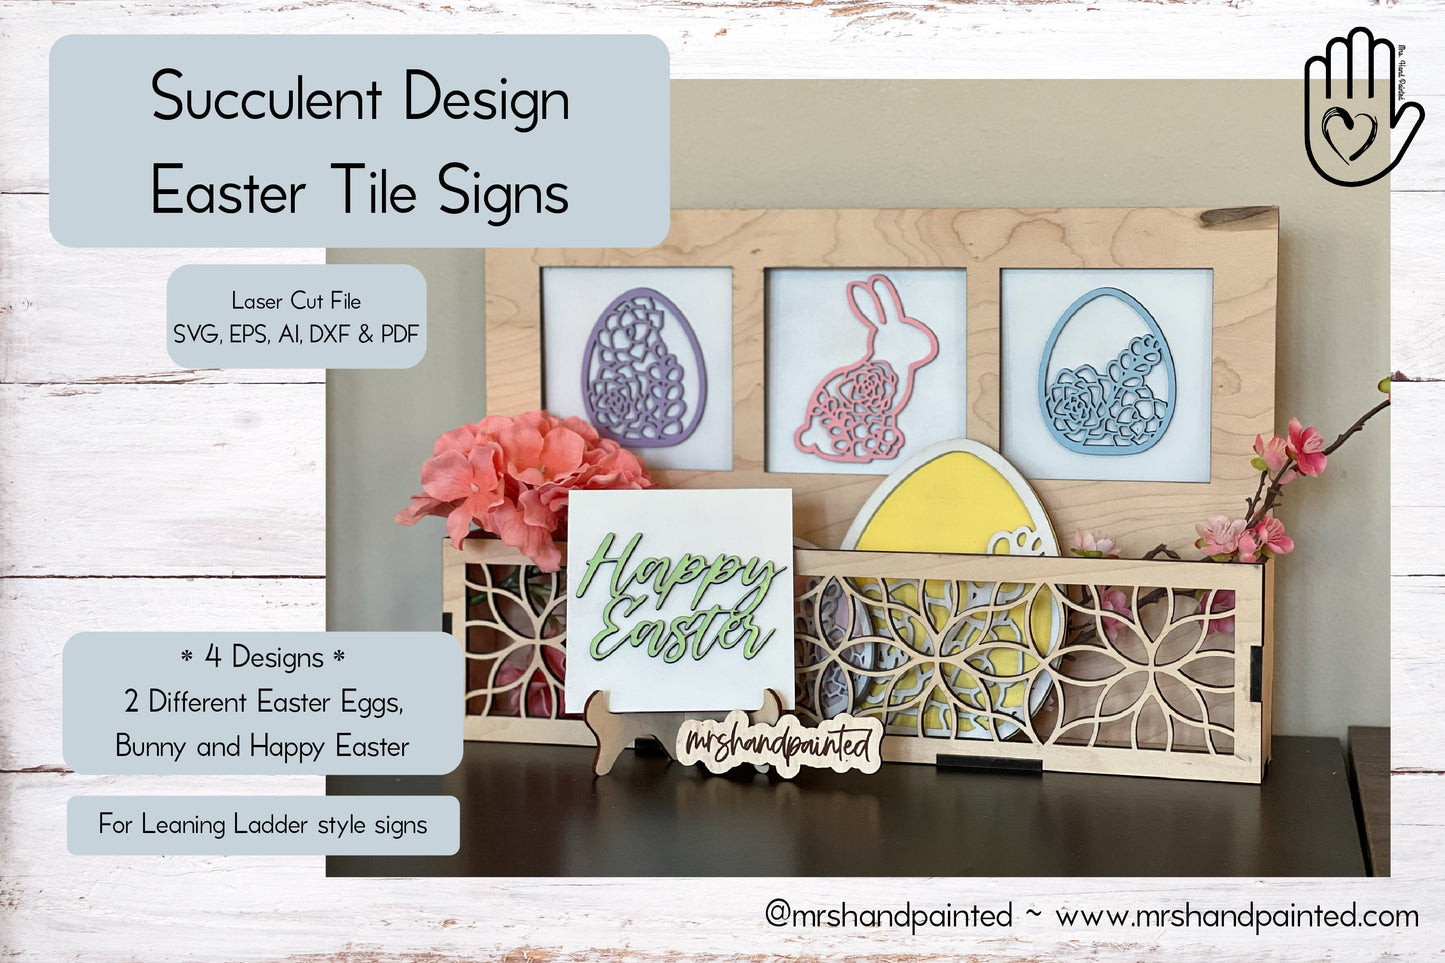 Laser Cut File - Succulents Easter Sign Tiles - Leaning Ladder Signs - Digital Download SVG, DXF, AI files